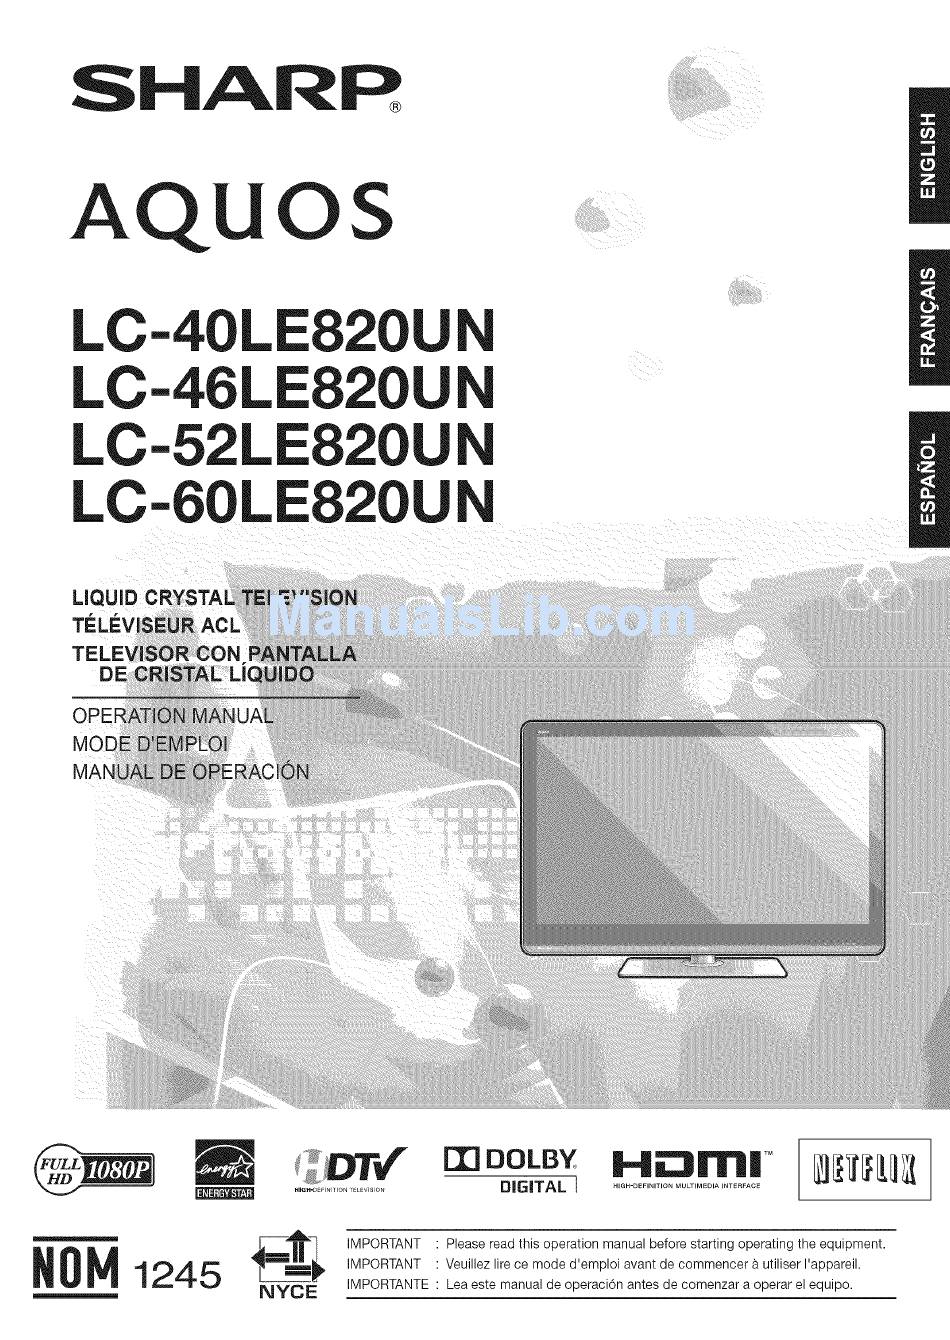 SHARP AQUOS LC-60LE820UN OPERATION MANUAL Pdf Download | ManualsLib